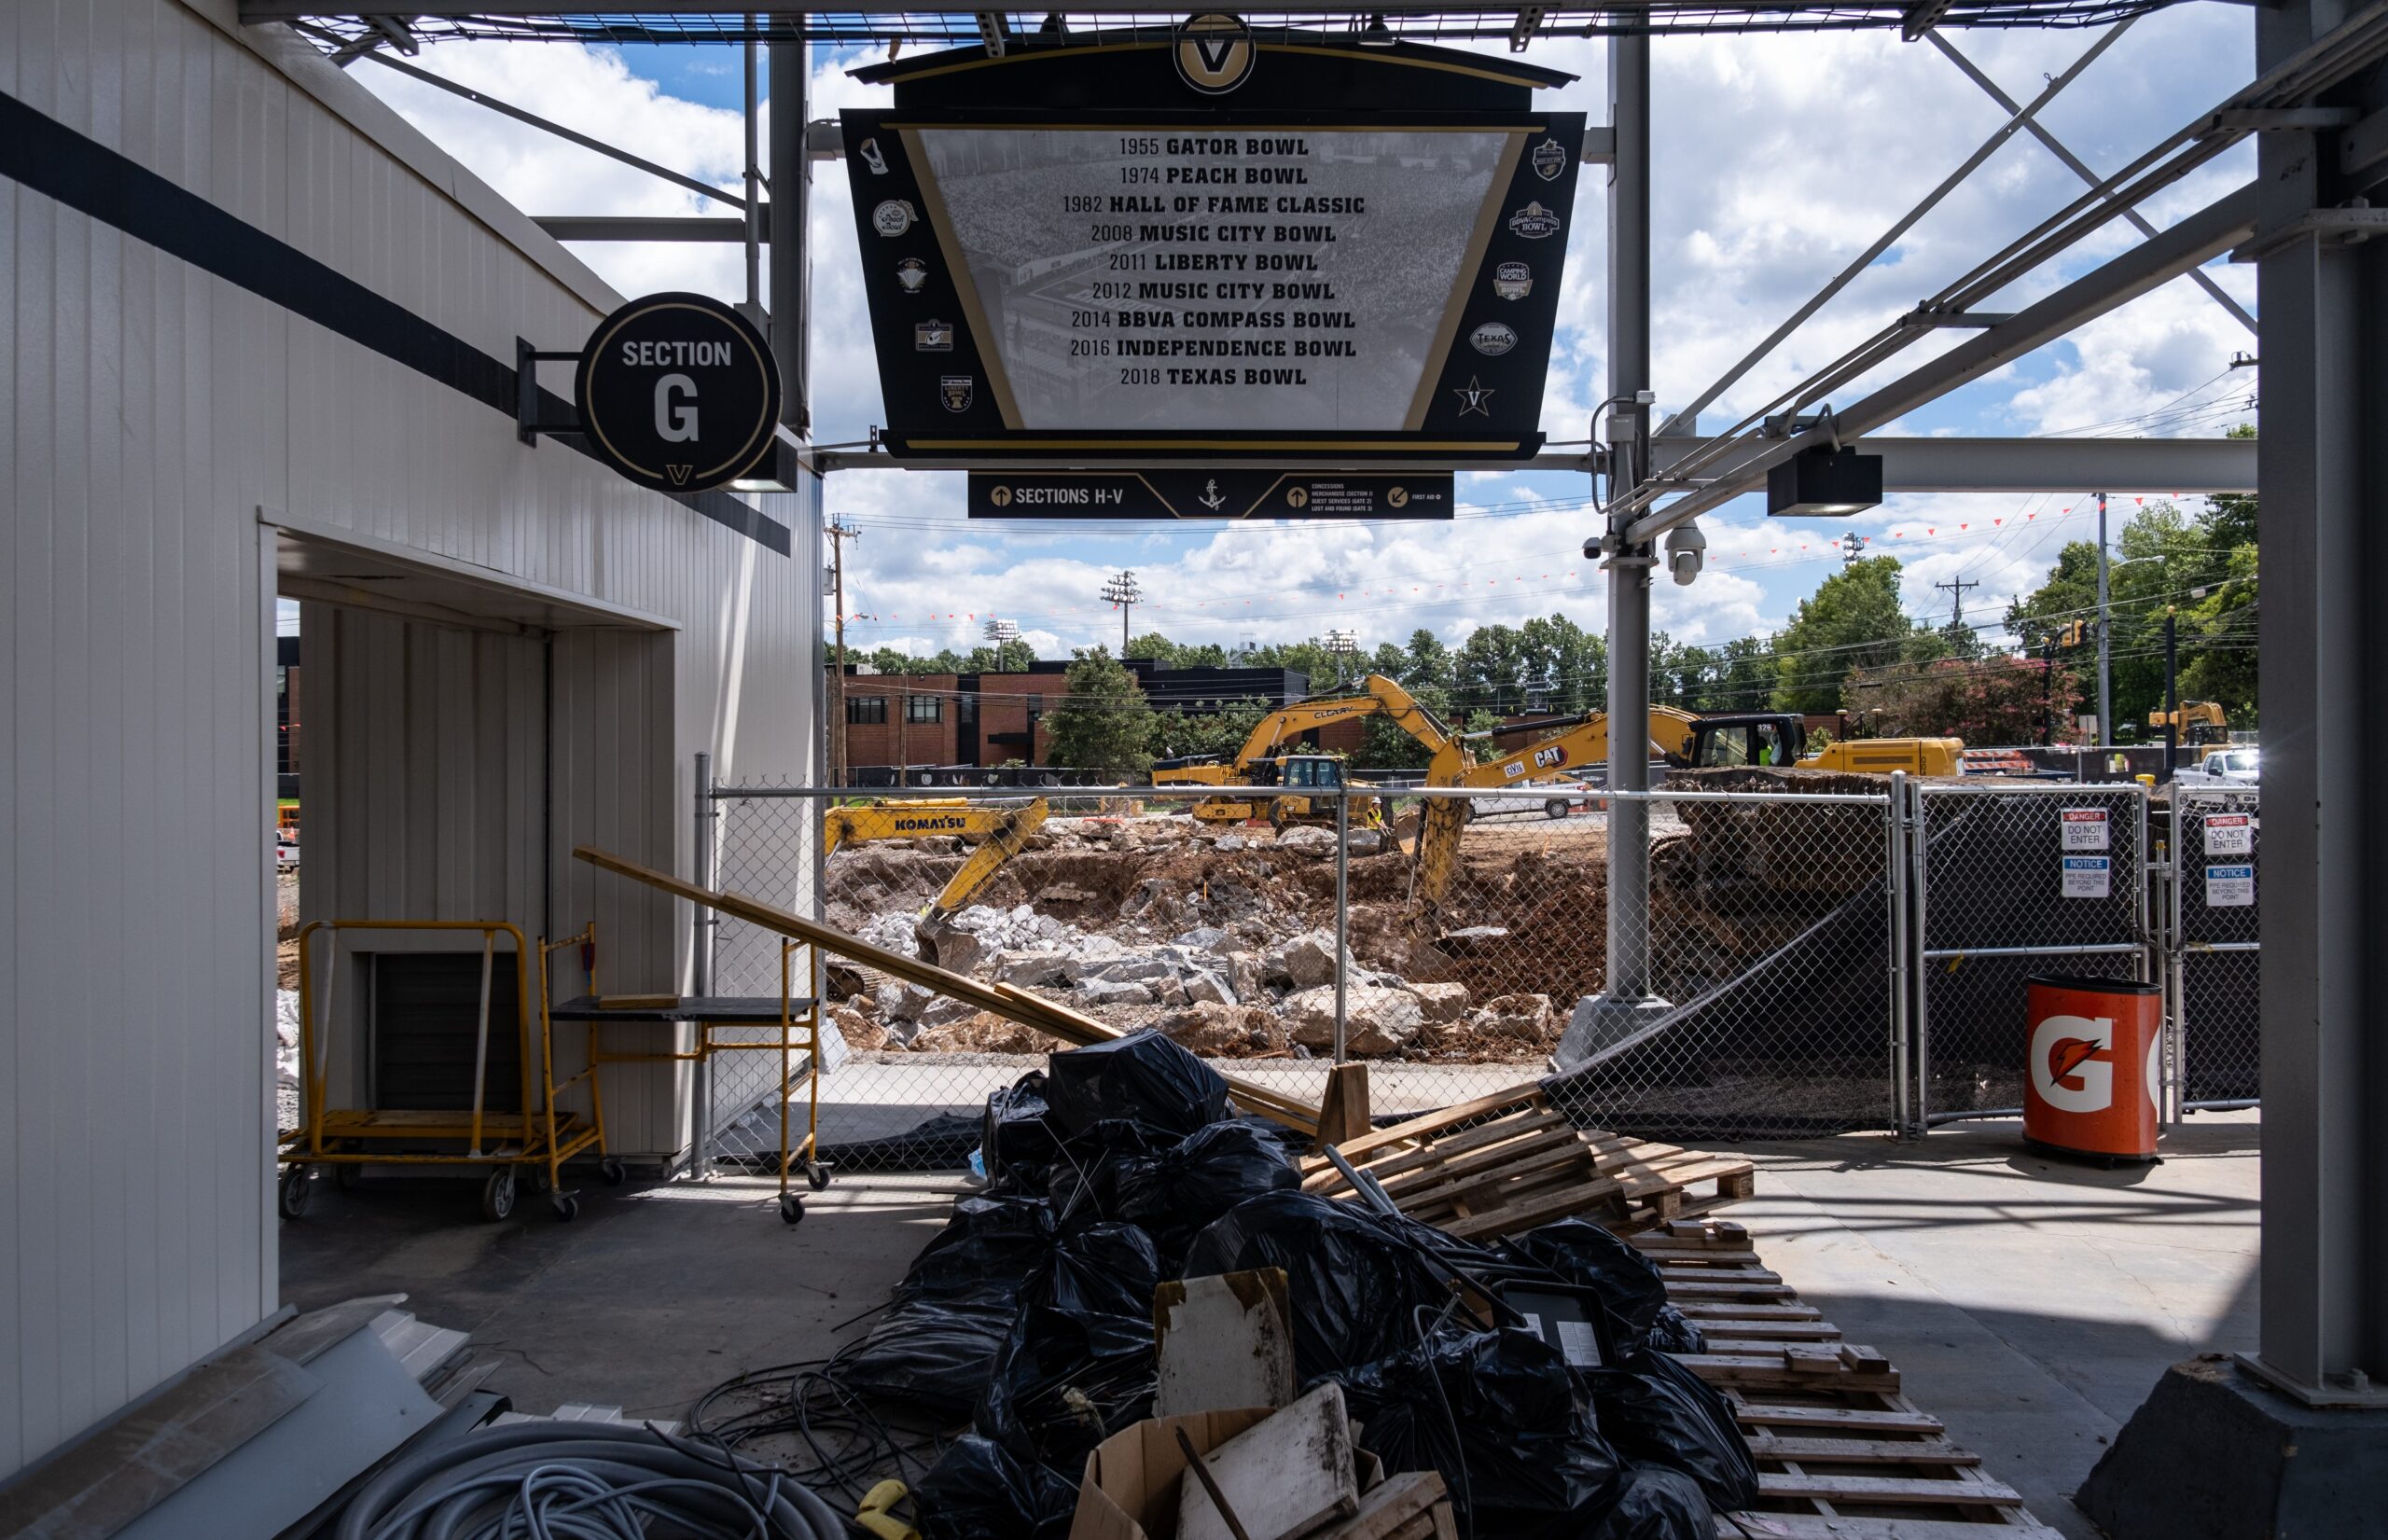 Construction continues at the FirstBank Stadium at Vanderbilt University